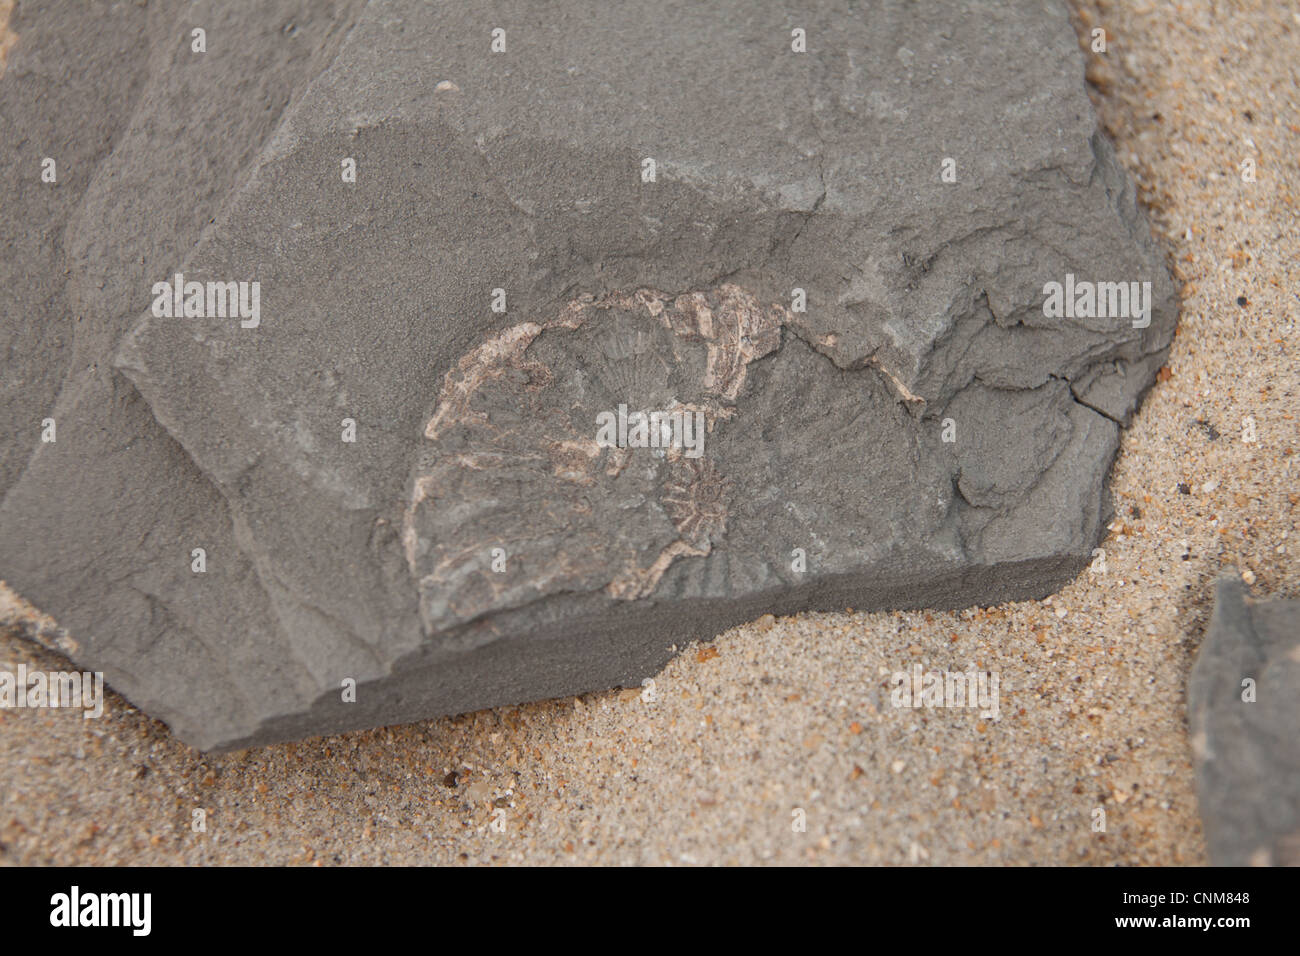 Fossil hunting at Lyme Regis along the Jurassic Coast of Dorset. Stock Photo